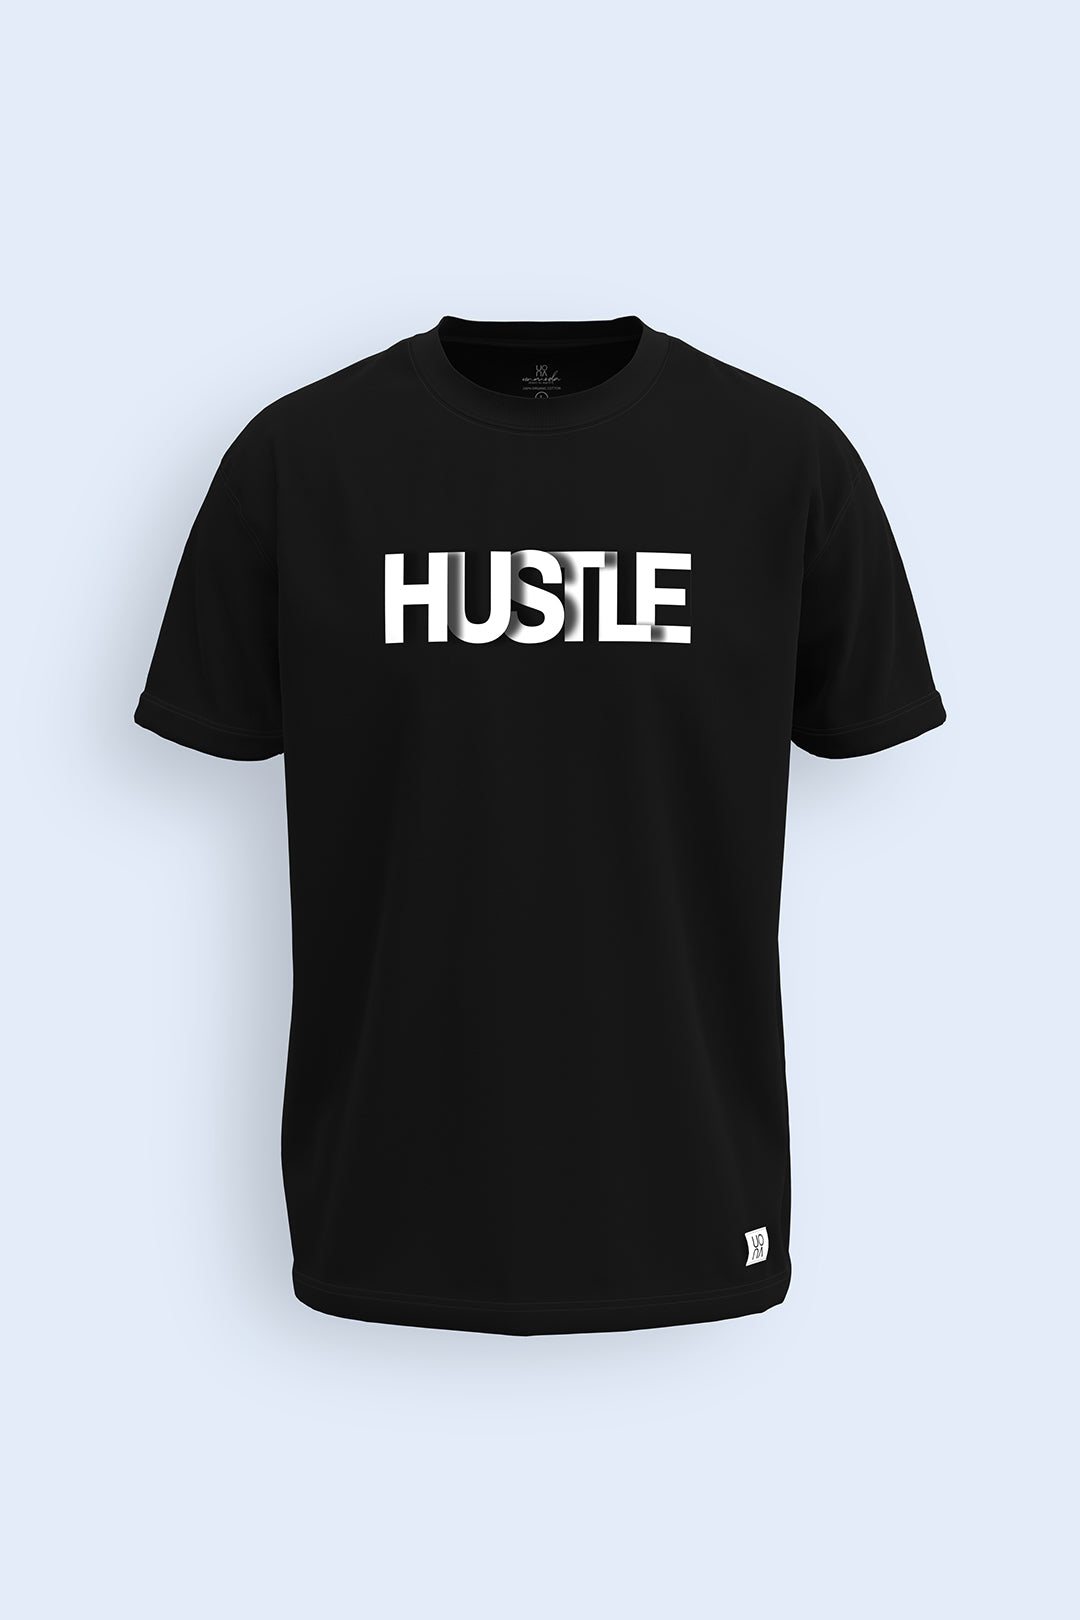 Unisex 100% Organic Cotton Classic Hustle T-Shirt